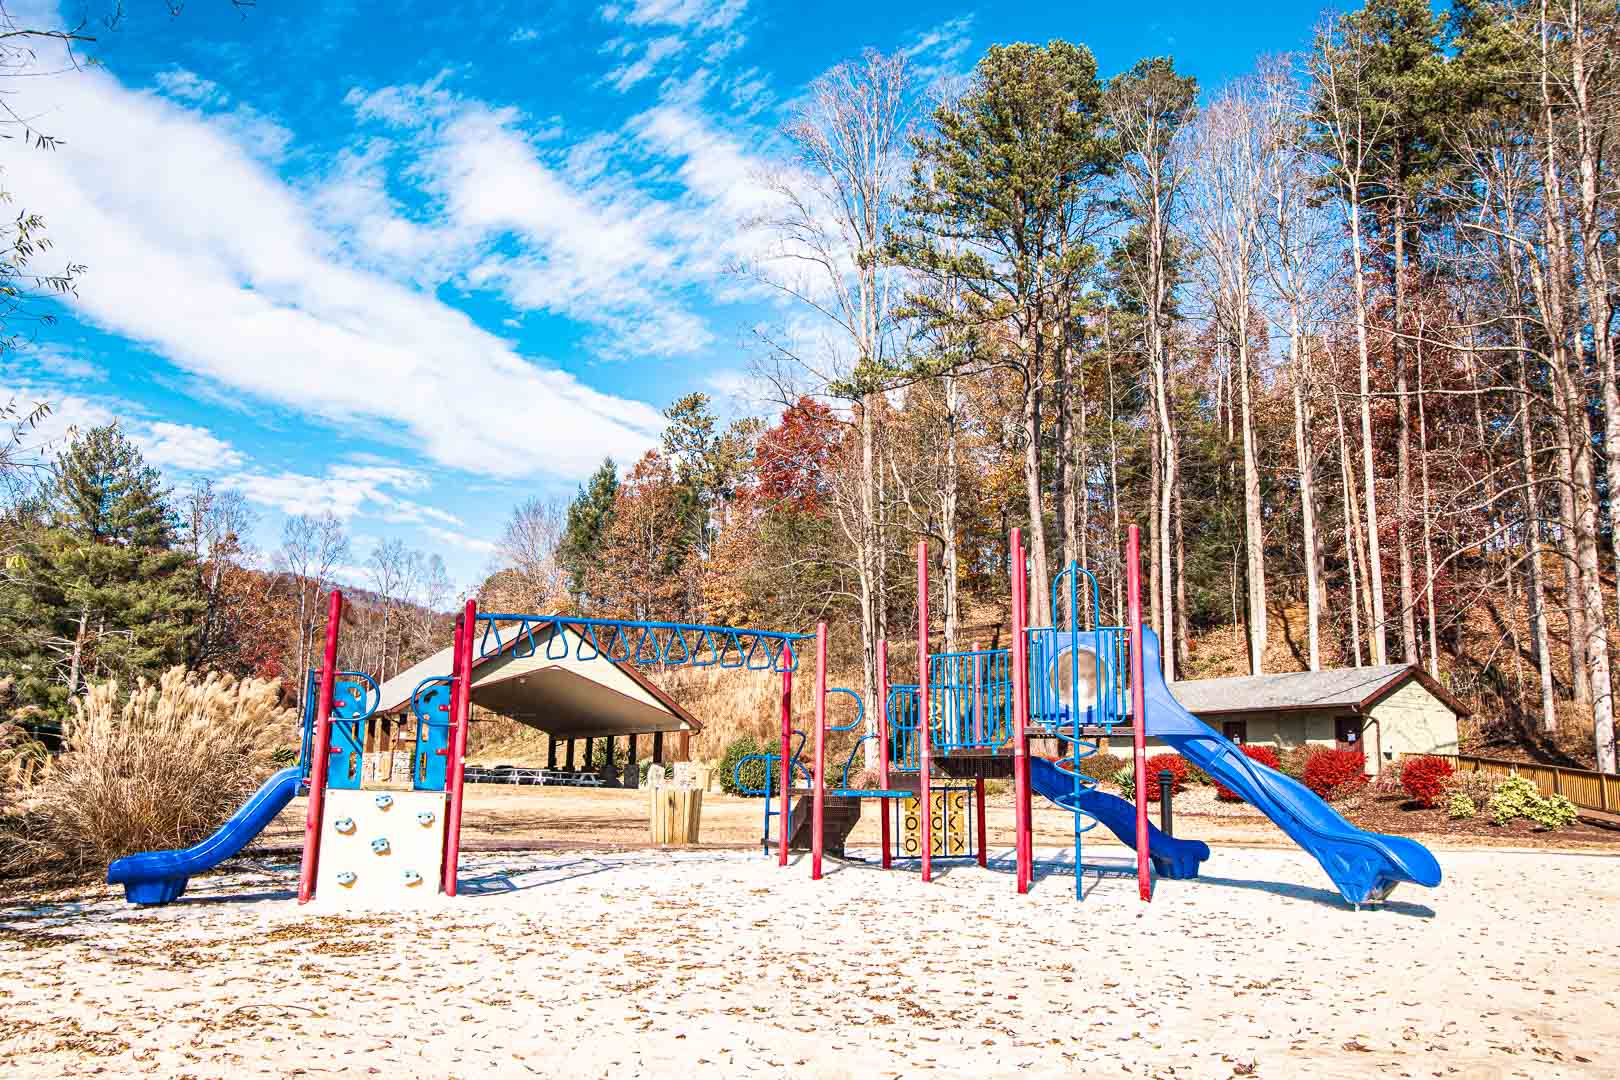 A colorful children's playground at VRI's Mountain Loft Resort in North Carolina.